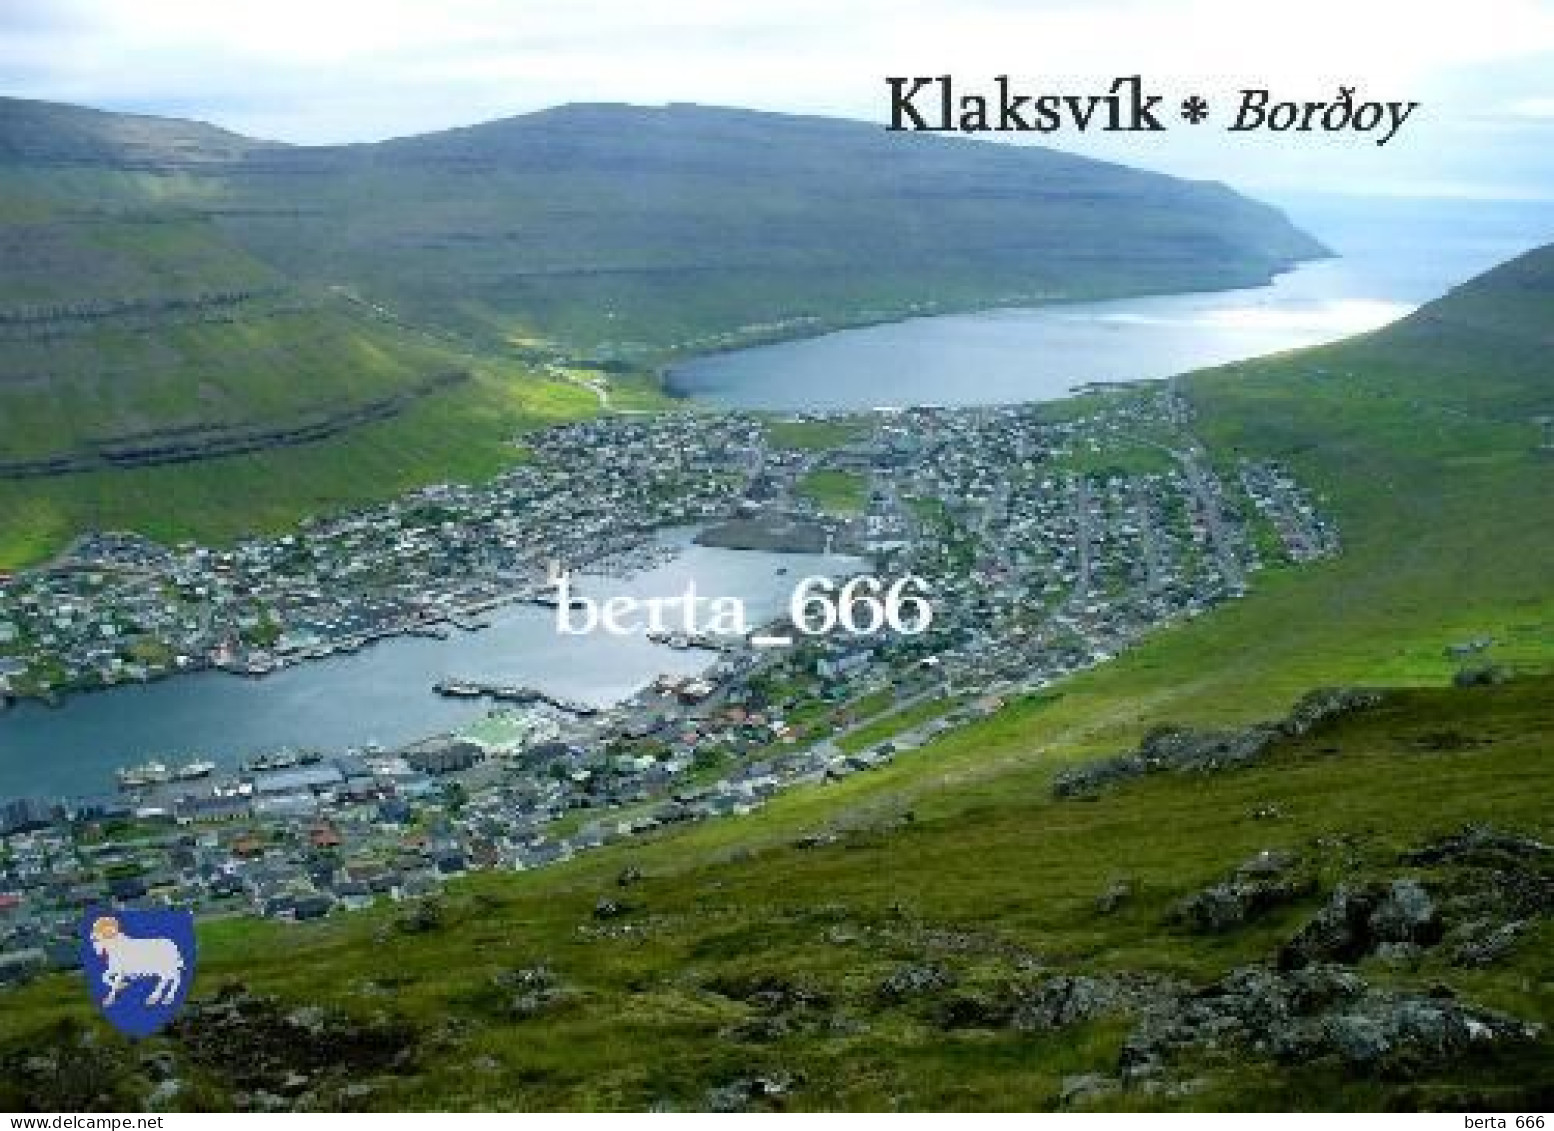 Faroe Islands Bordoy Klaksvik Aerial View New Postcard - Faroe Islands